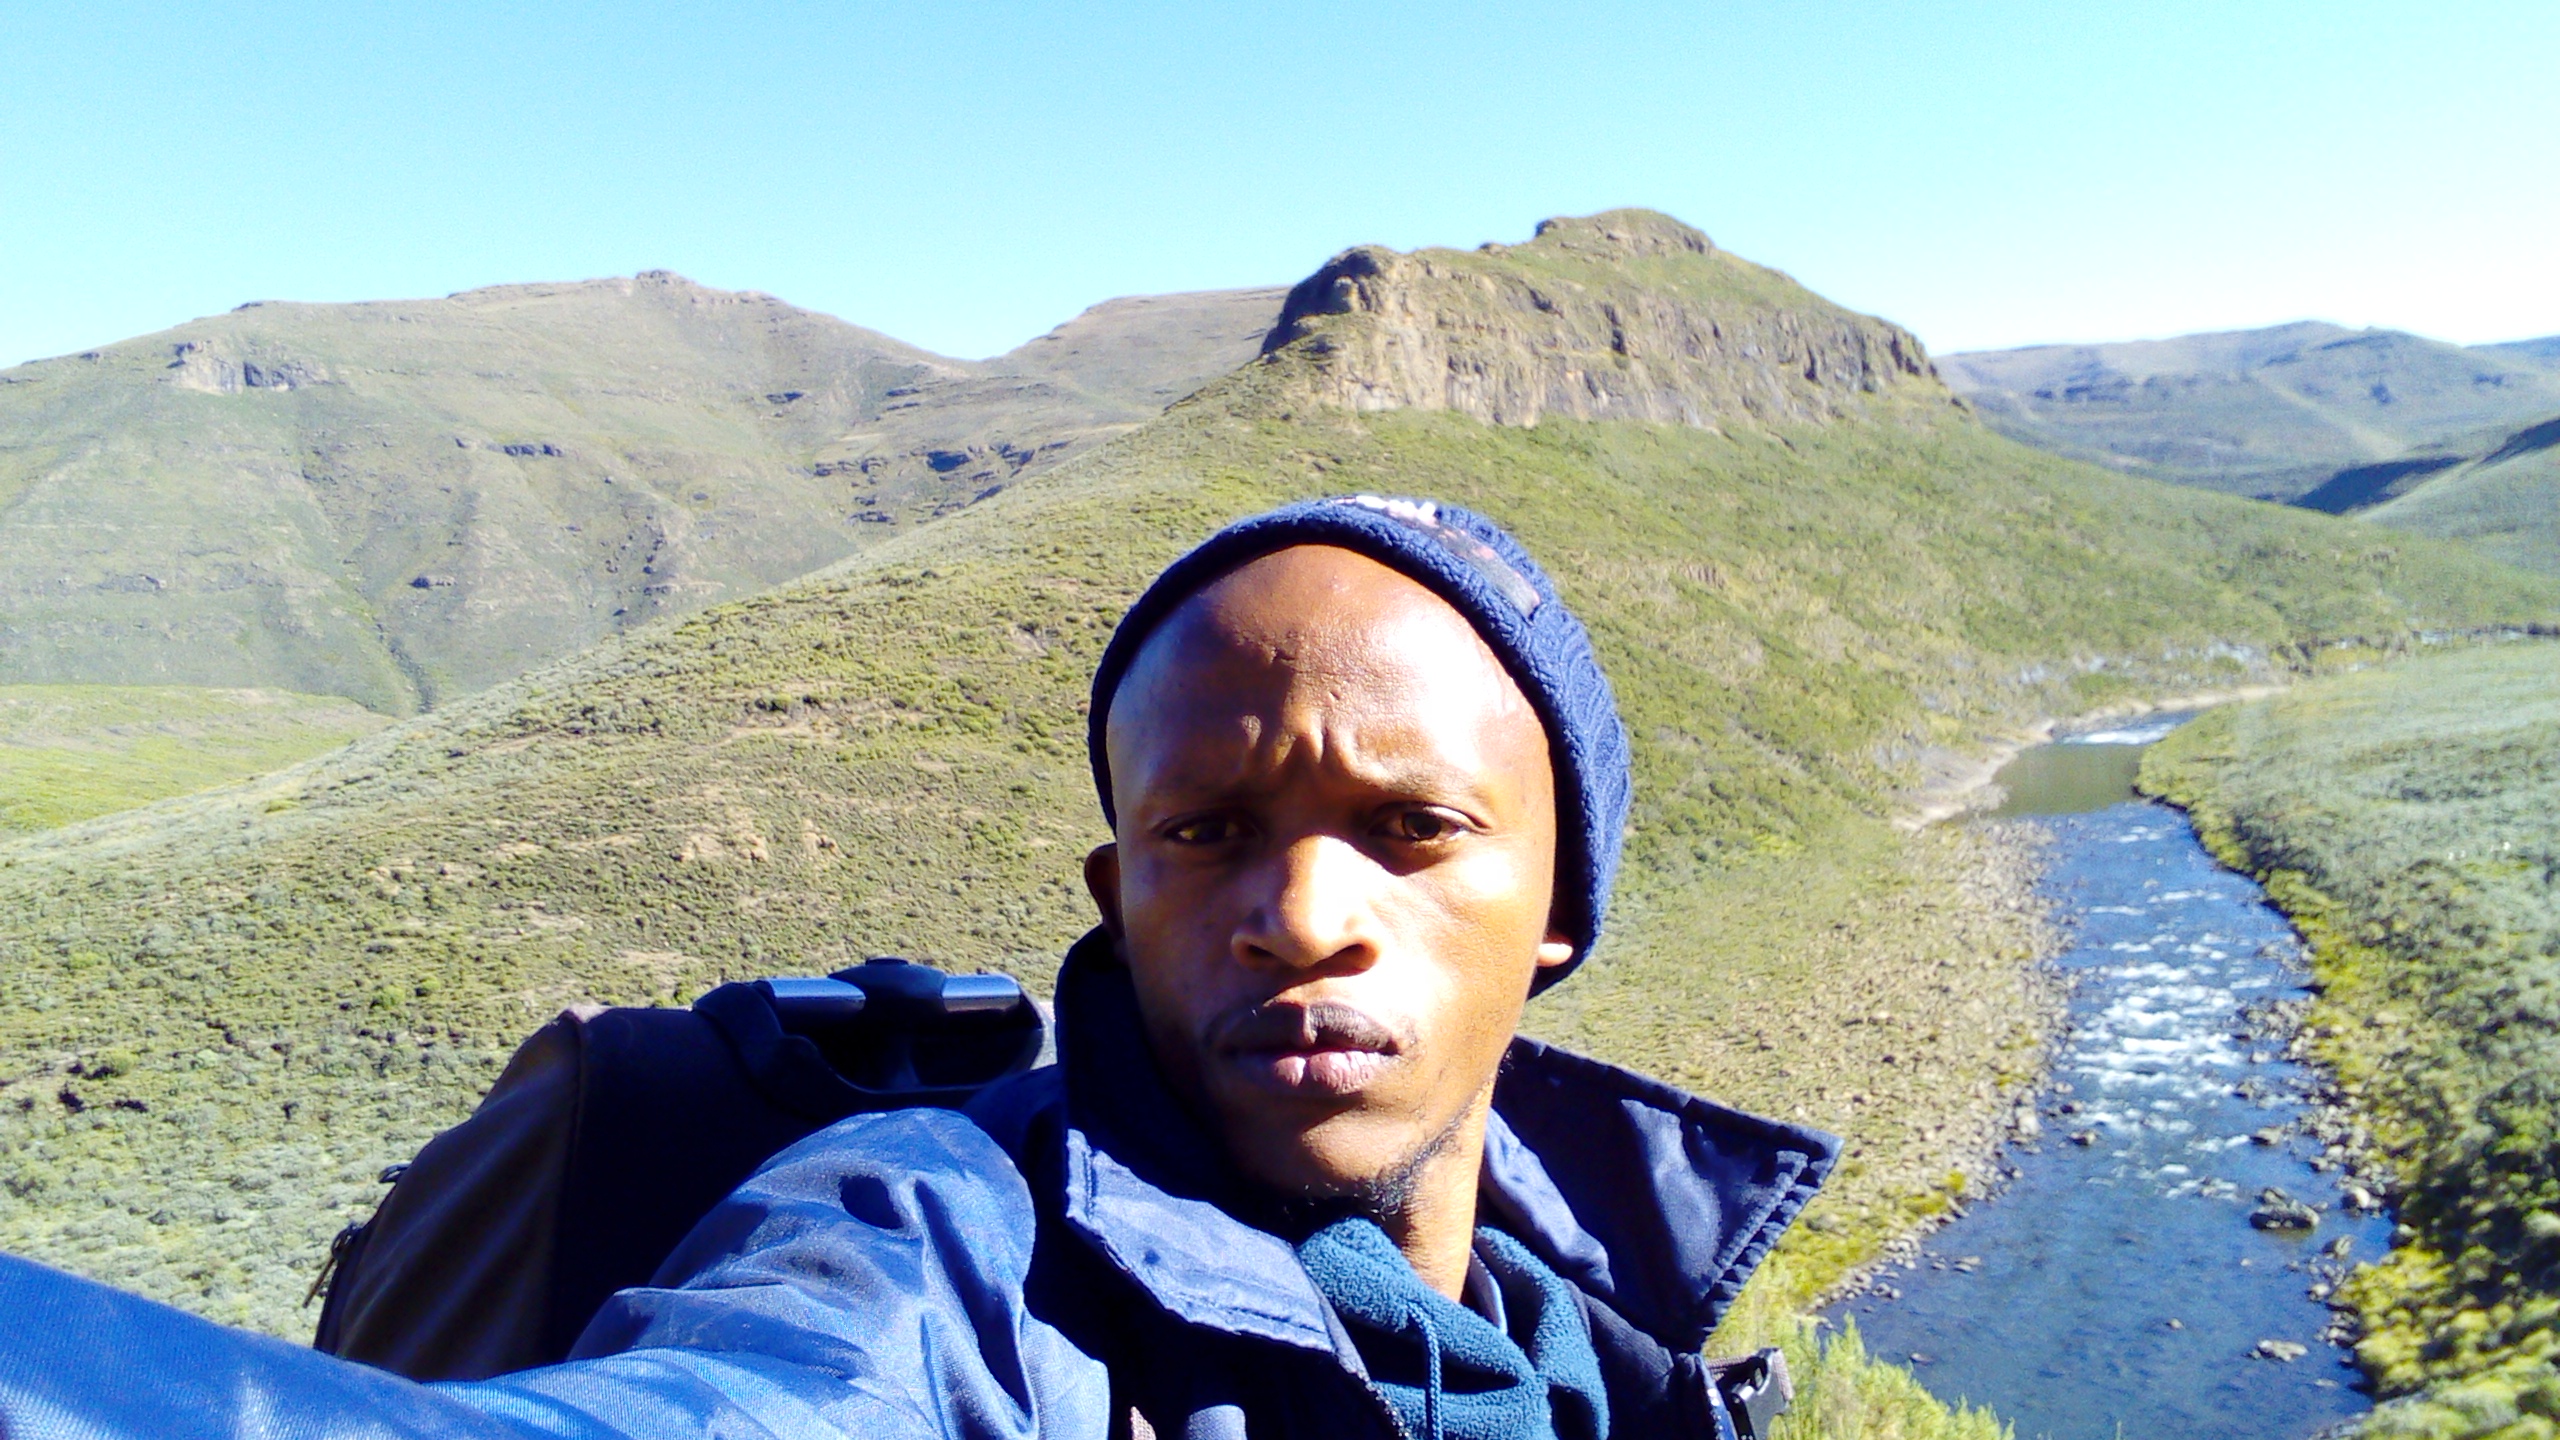 Ntiea Letsapo from Lesotho